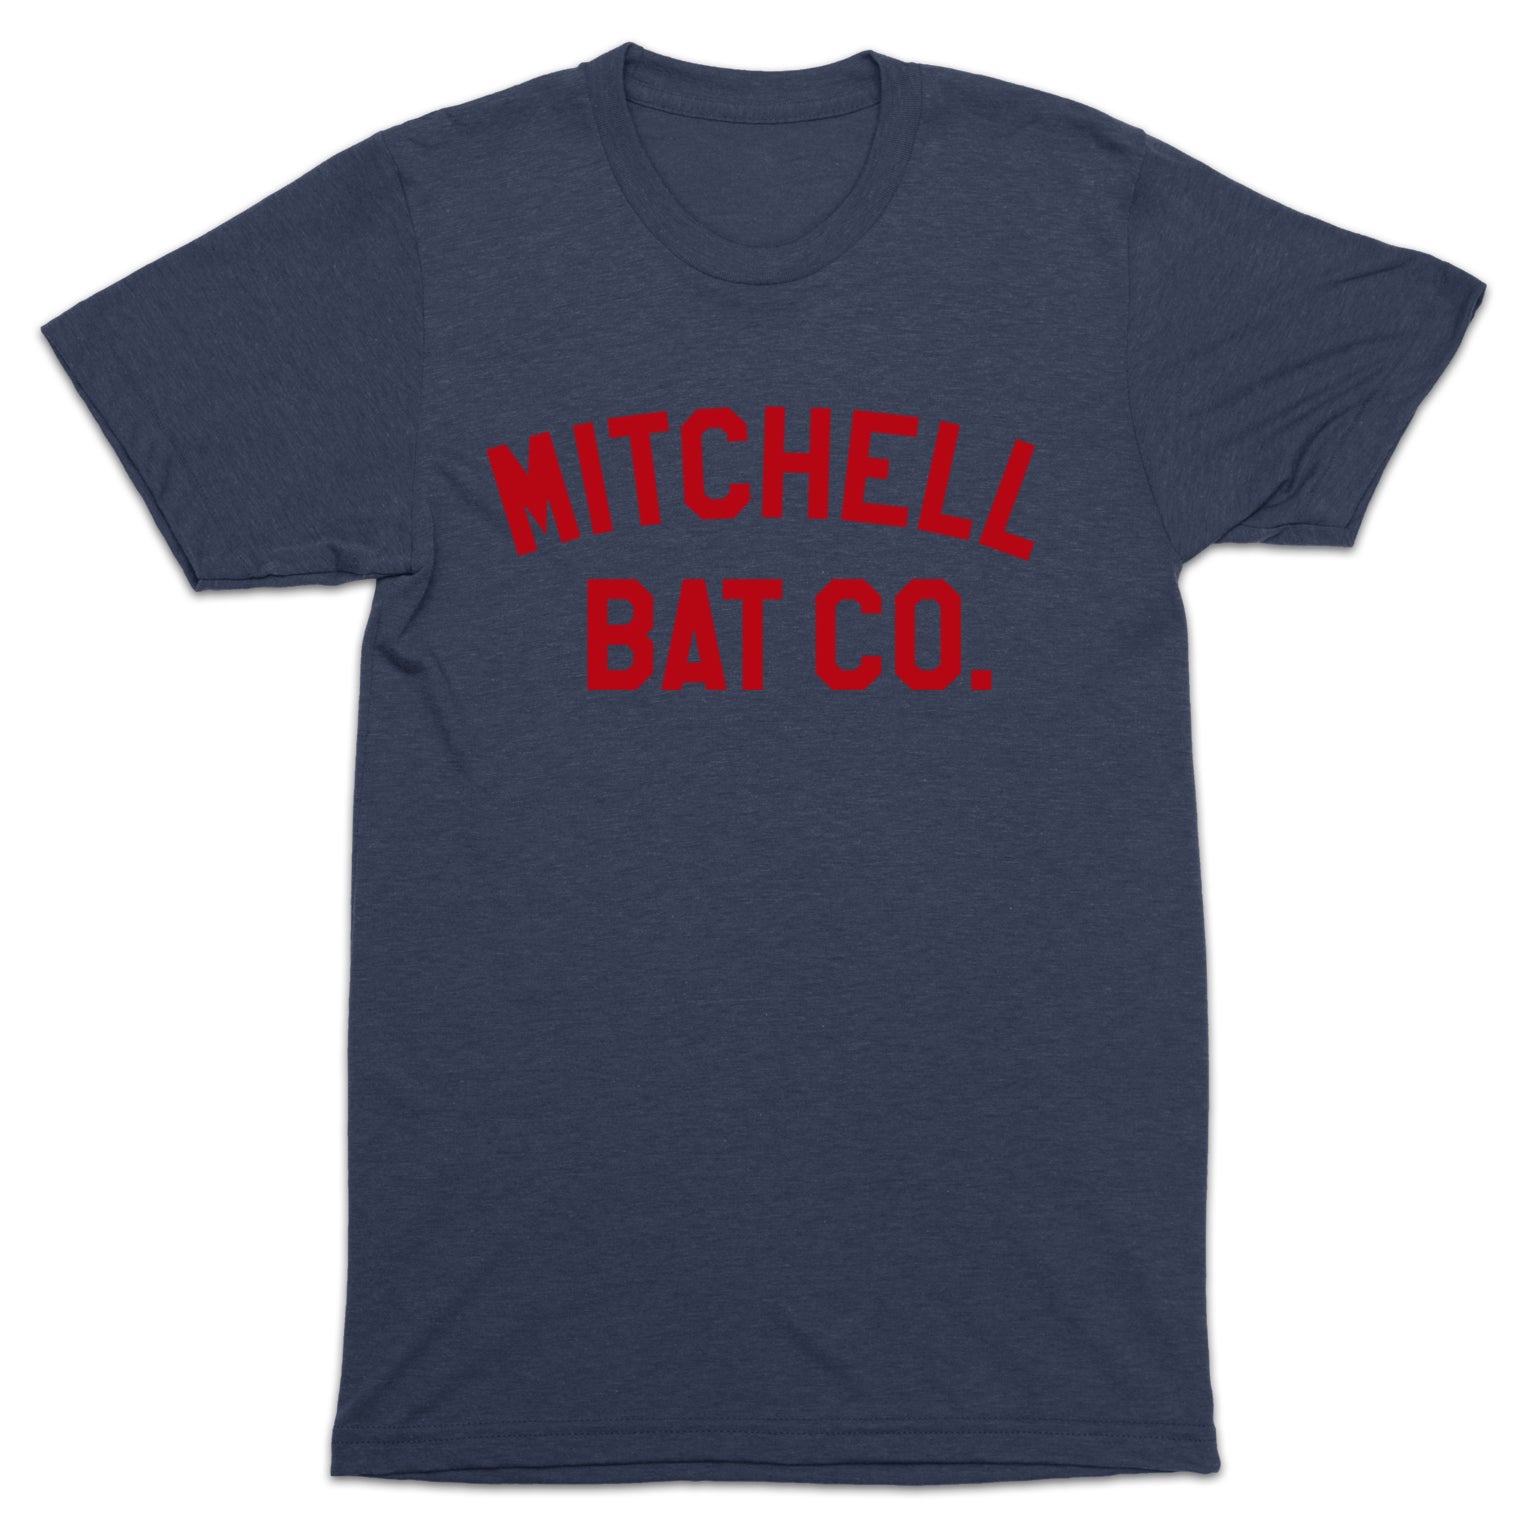 Mitchell Bat Co. short sleeve block tee (navy/red)